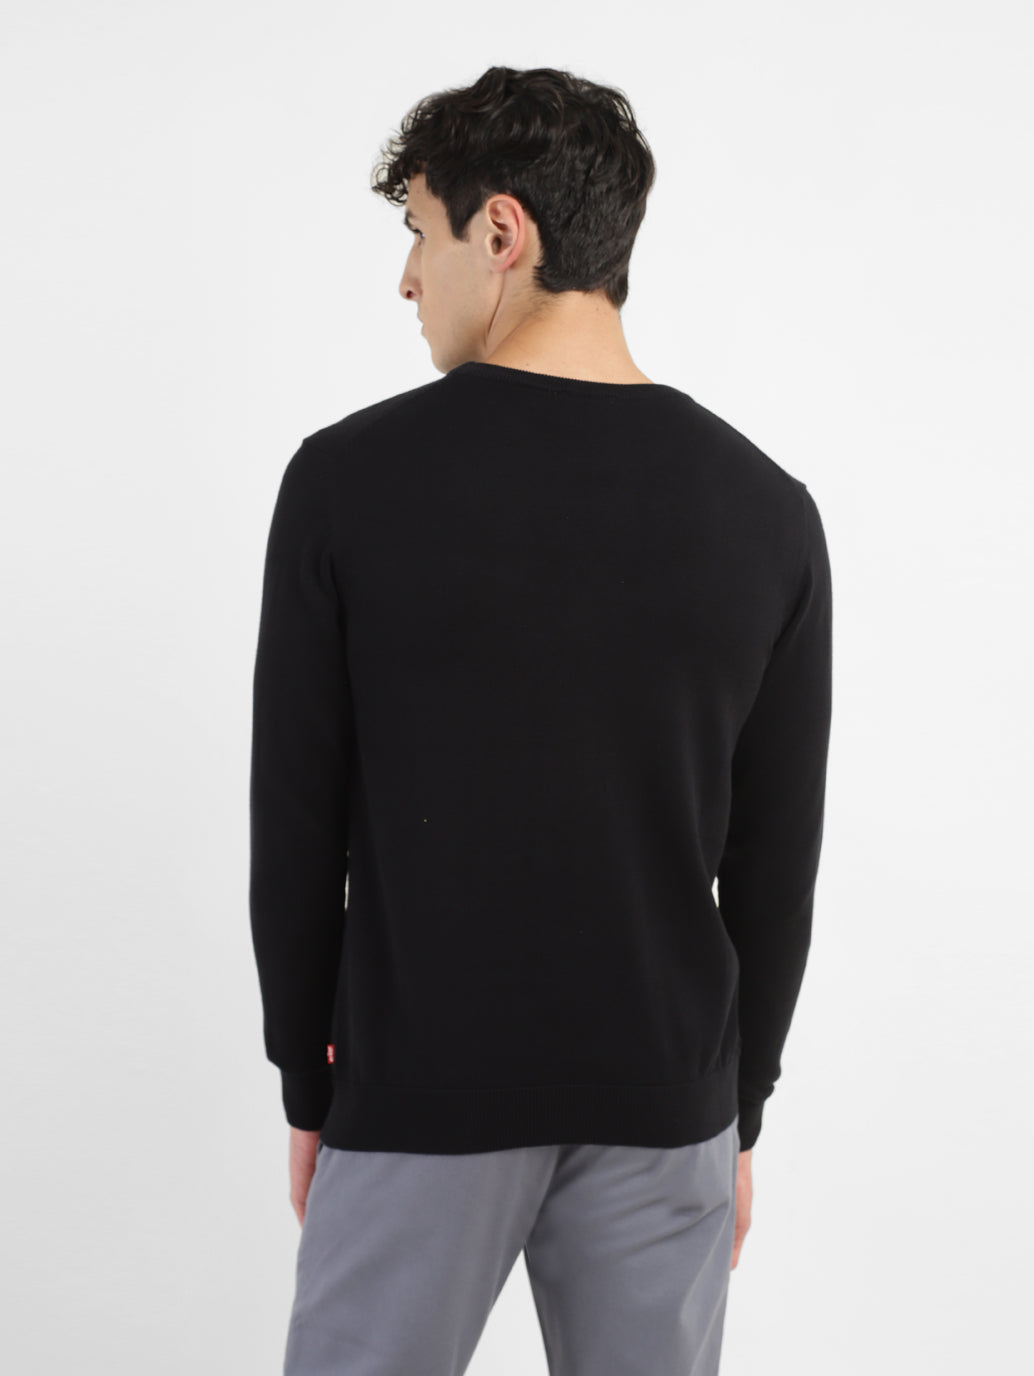 Men's Printed Crew Neck Sweater